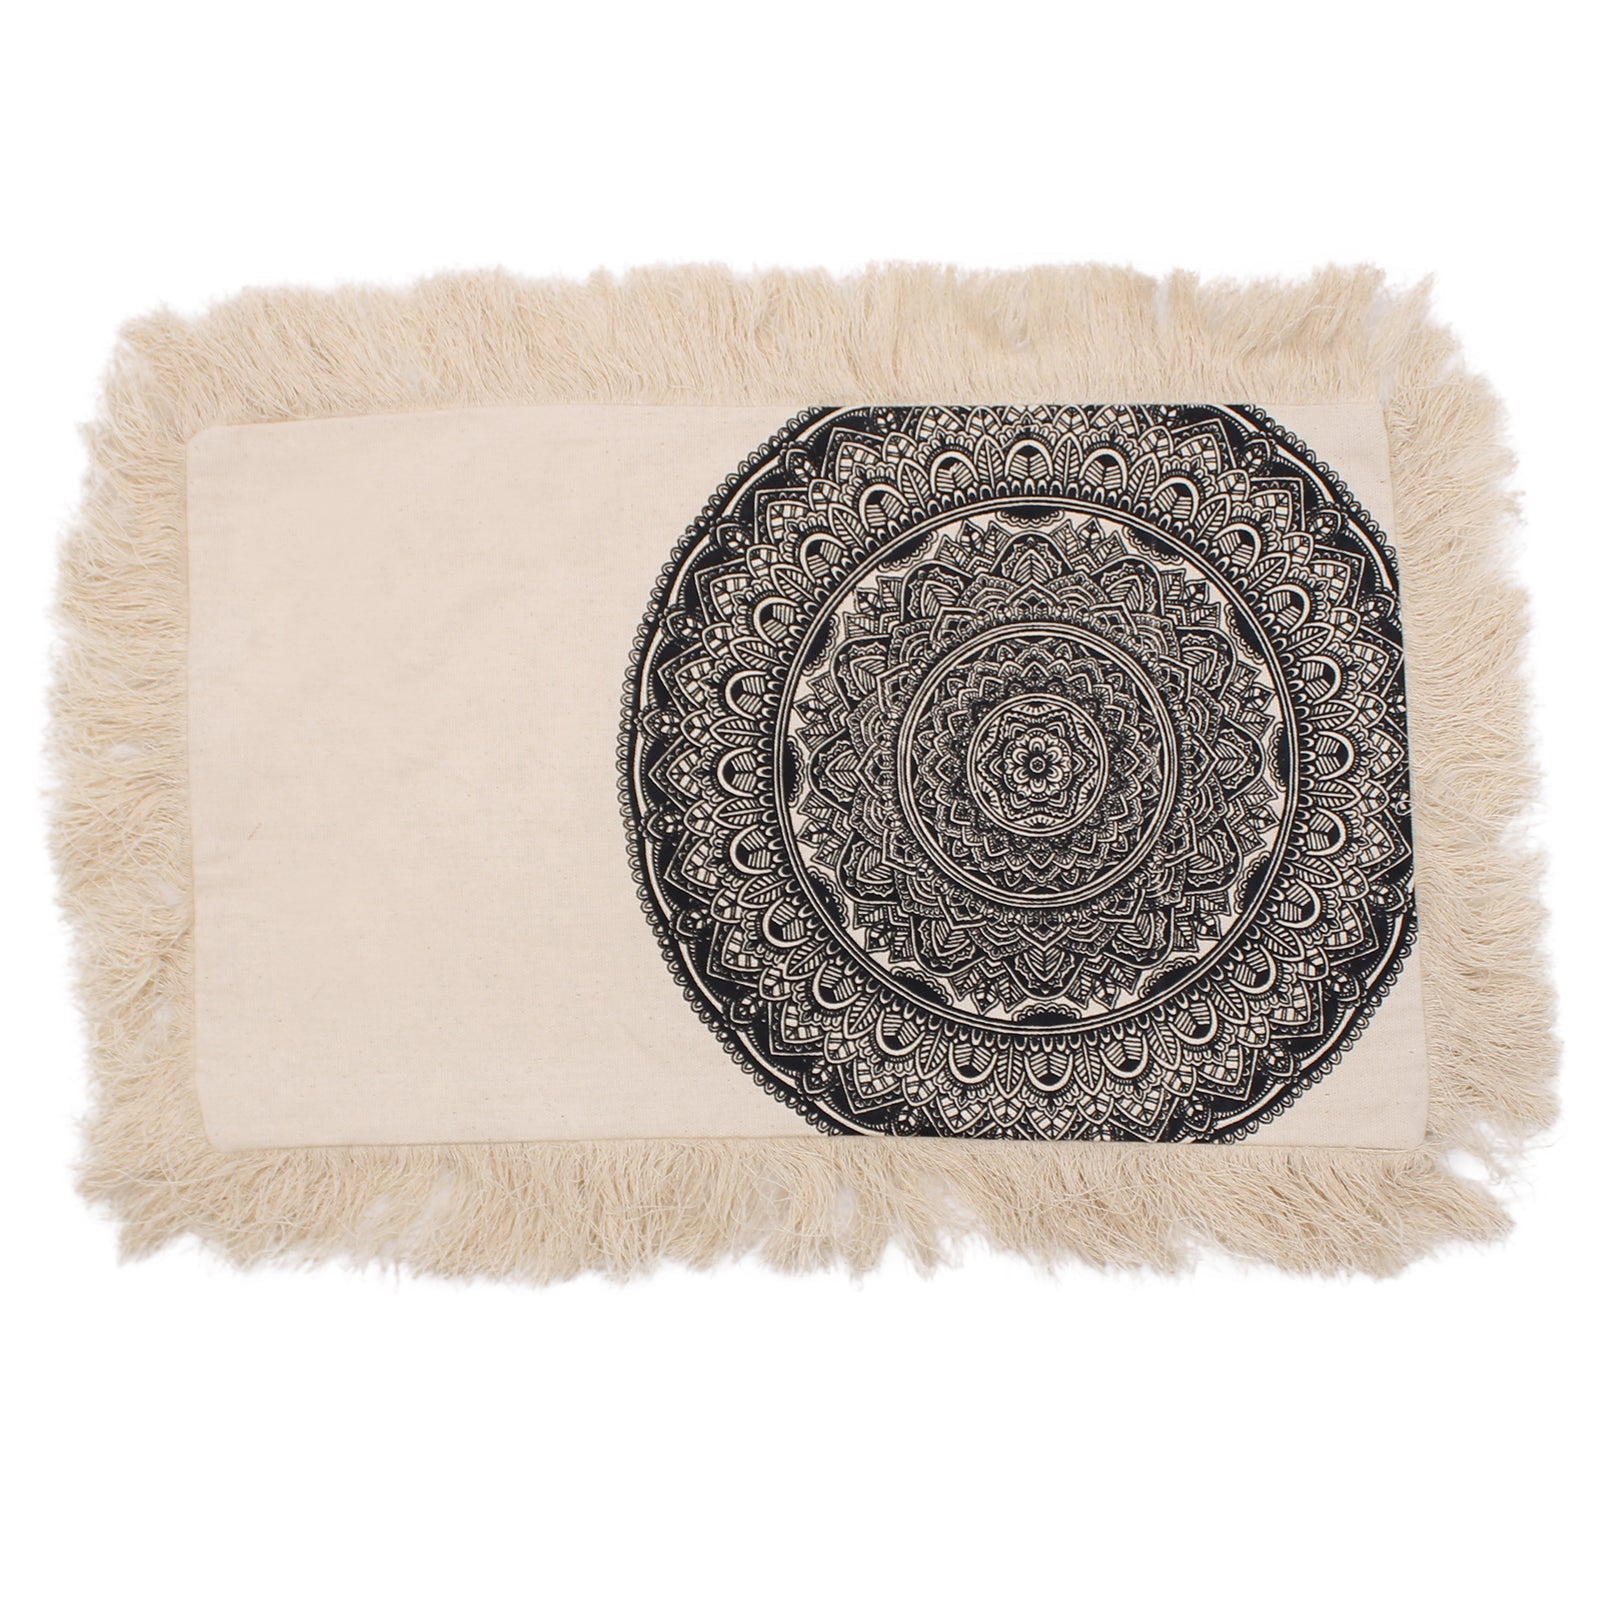 View Traditional Mandala Cushion 30x50cm black information